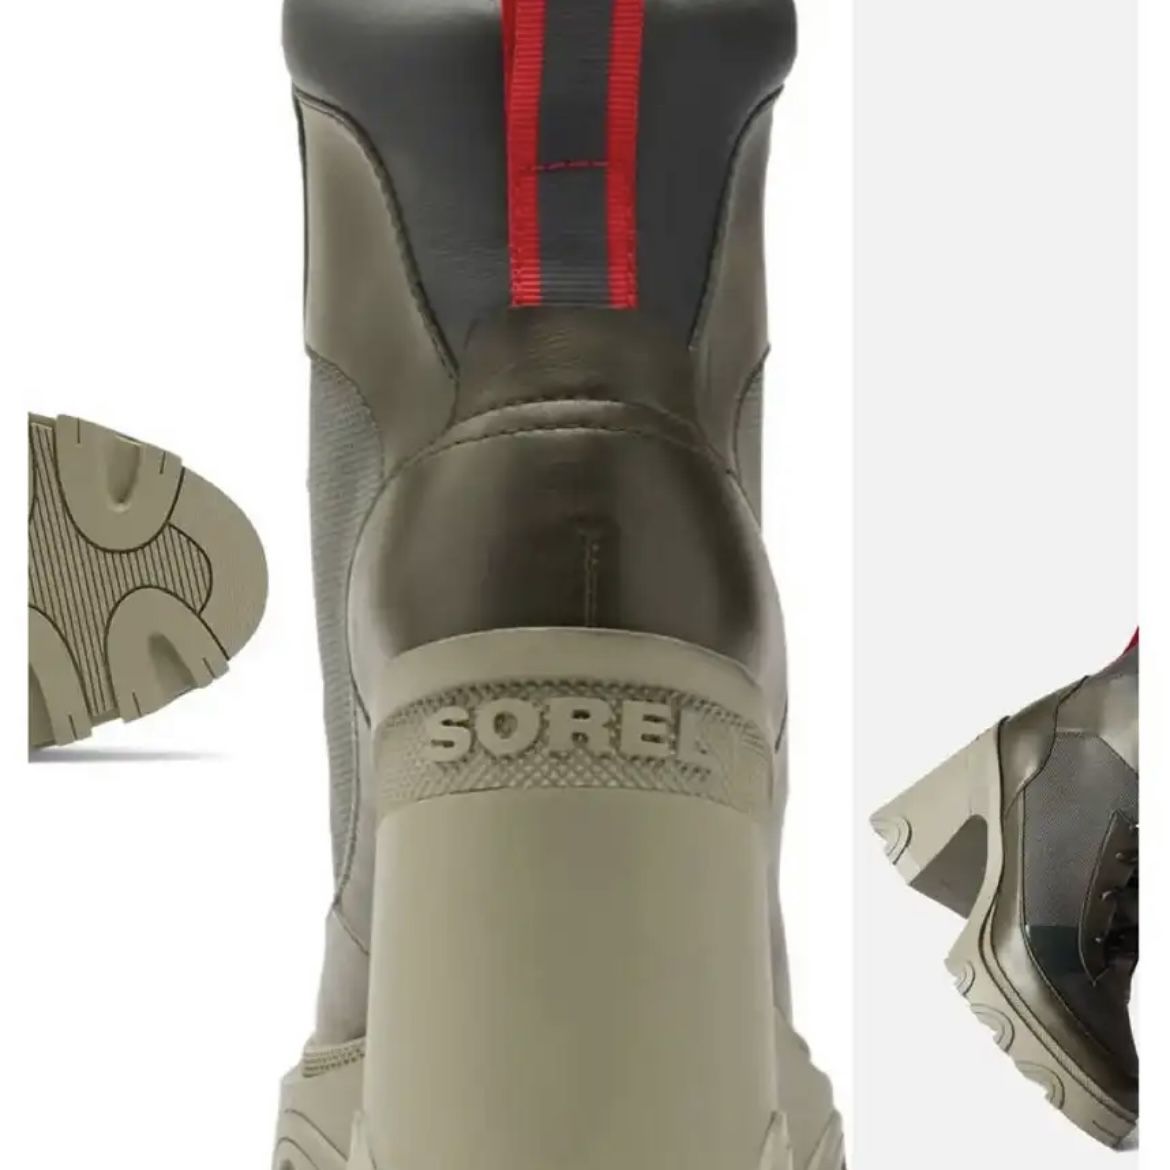 New In Box Sorel Brex Waterproof Heeled Boots Size 8